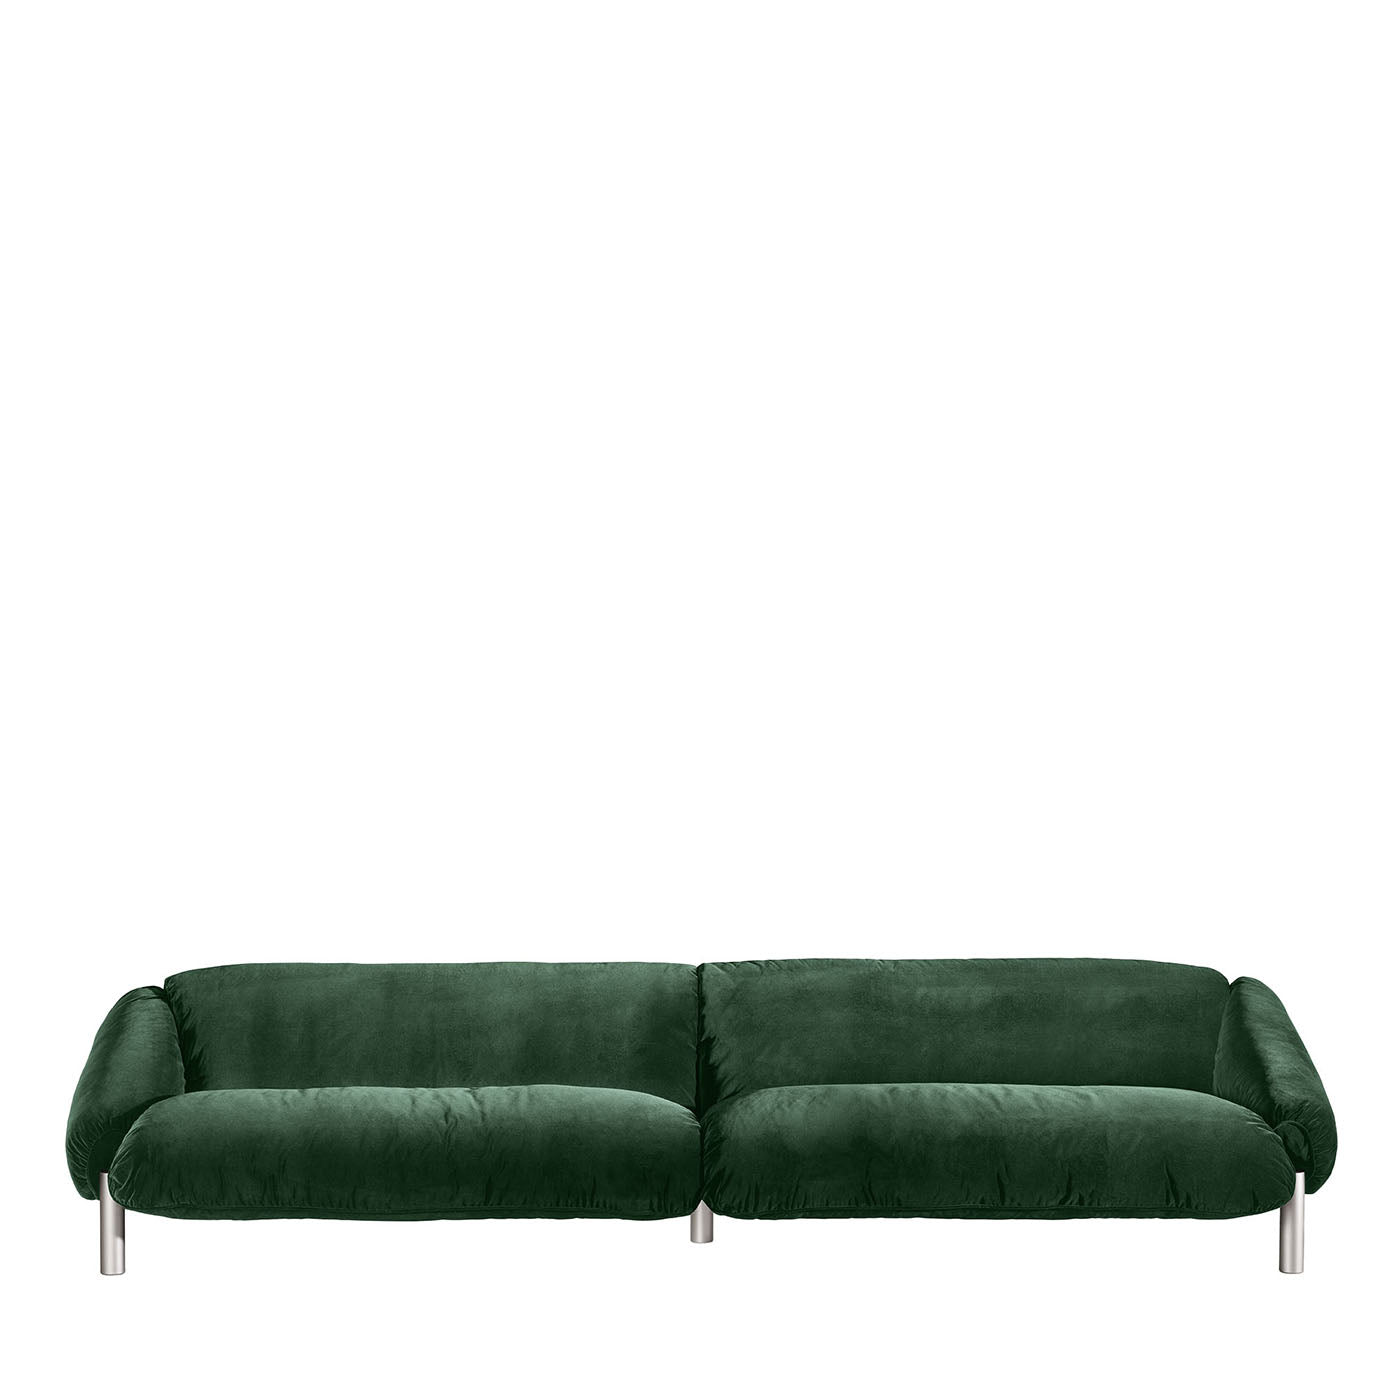 Flo 4-Seater Green Fabric Sofa by Lorenza Bozzoli - Main view